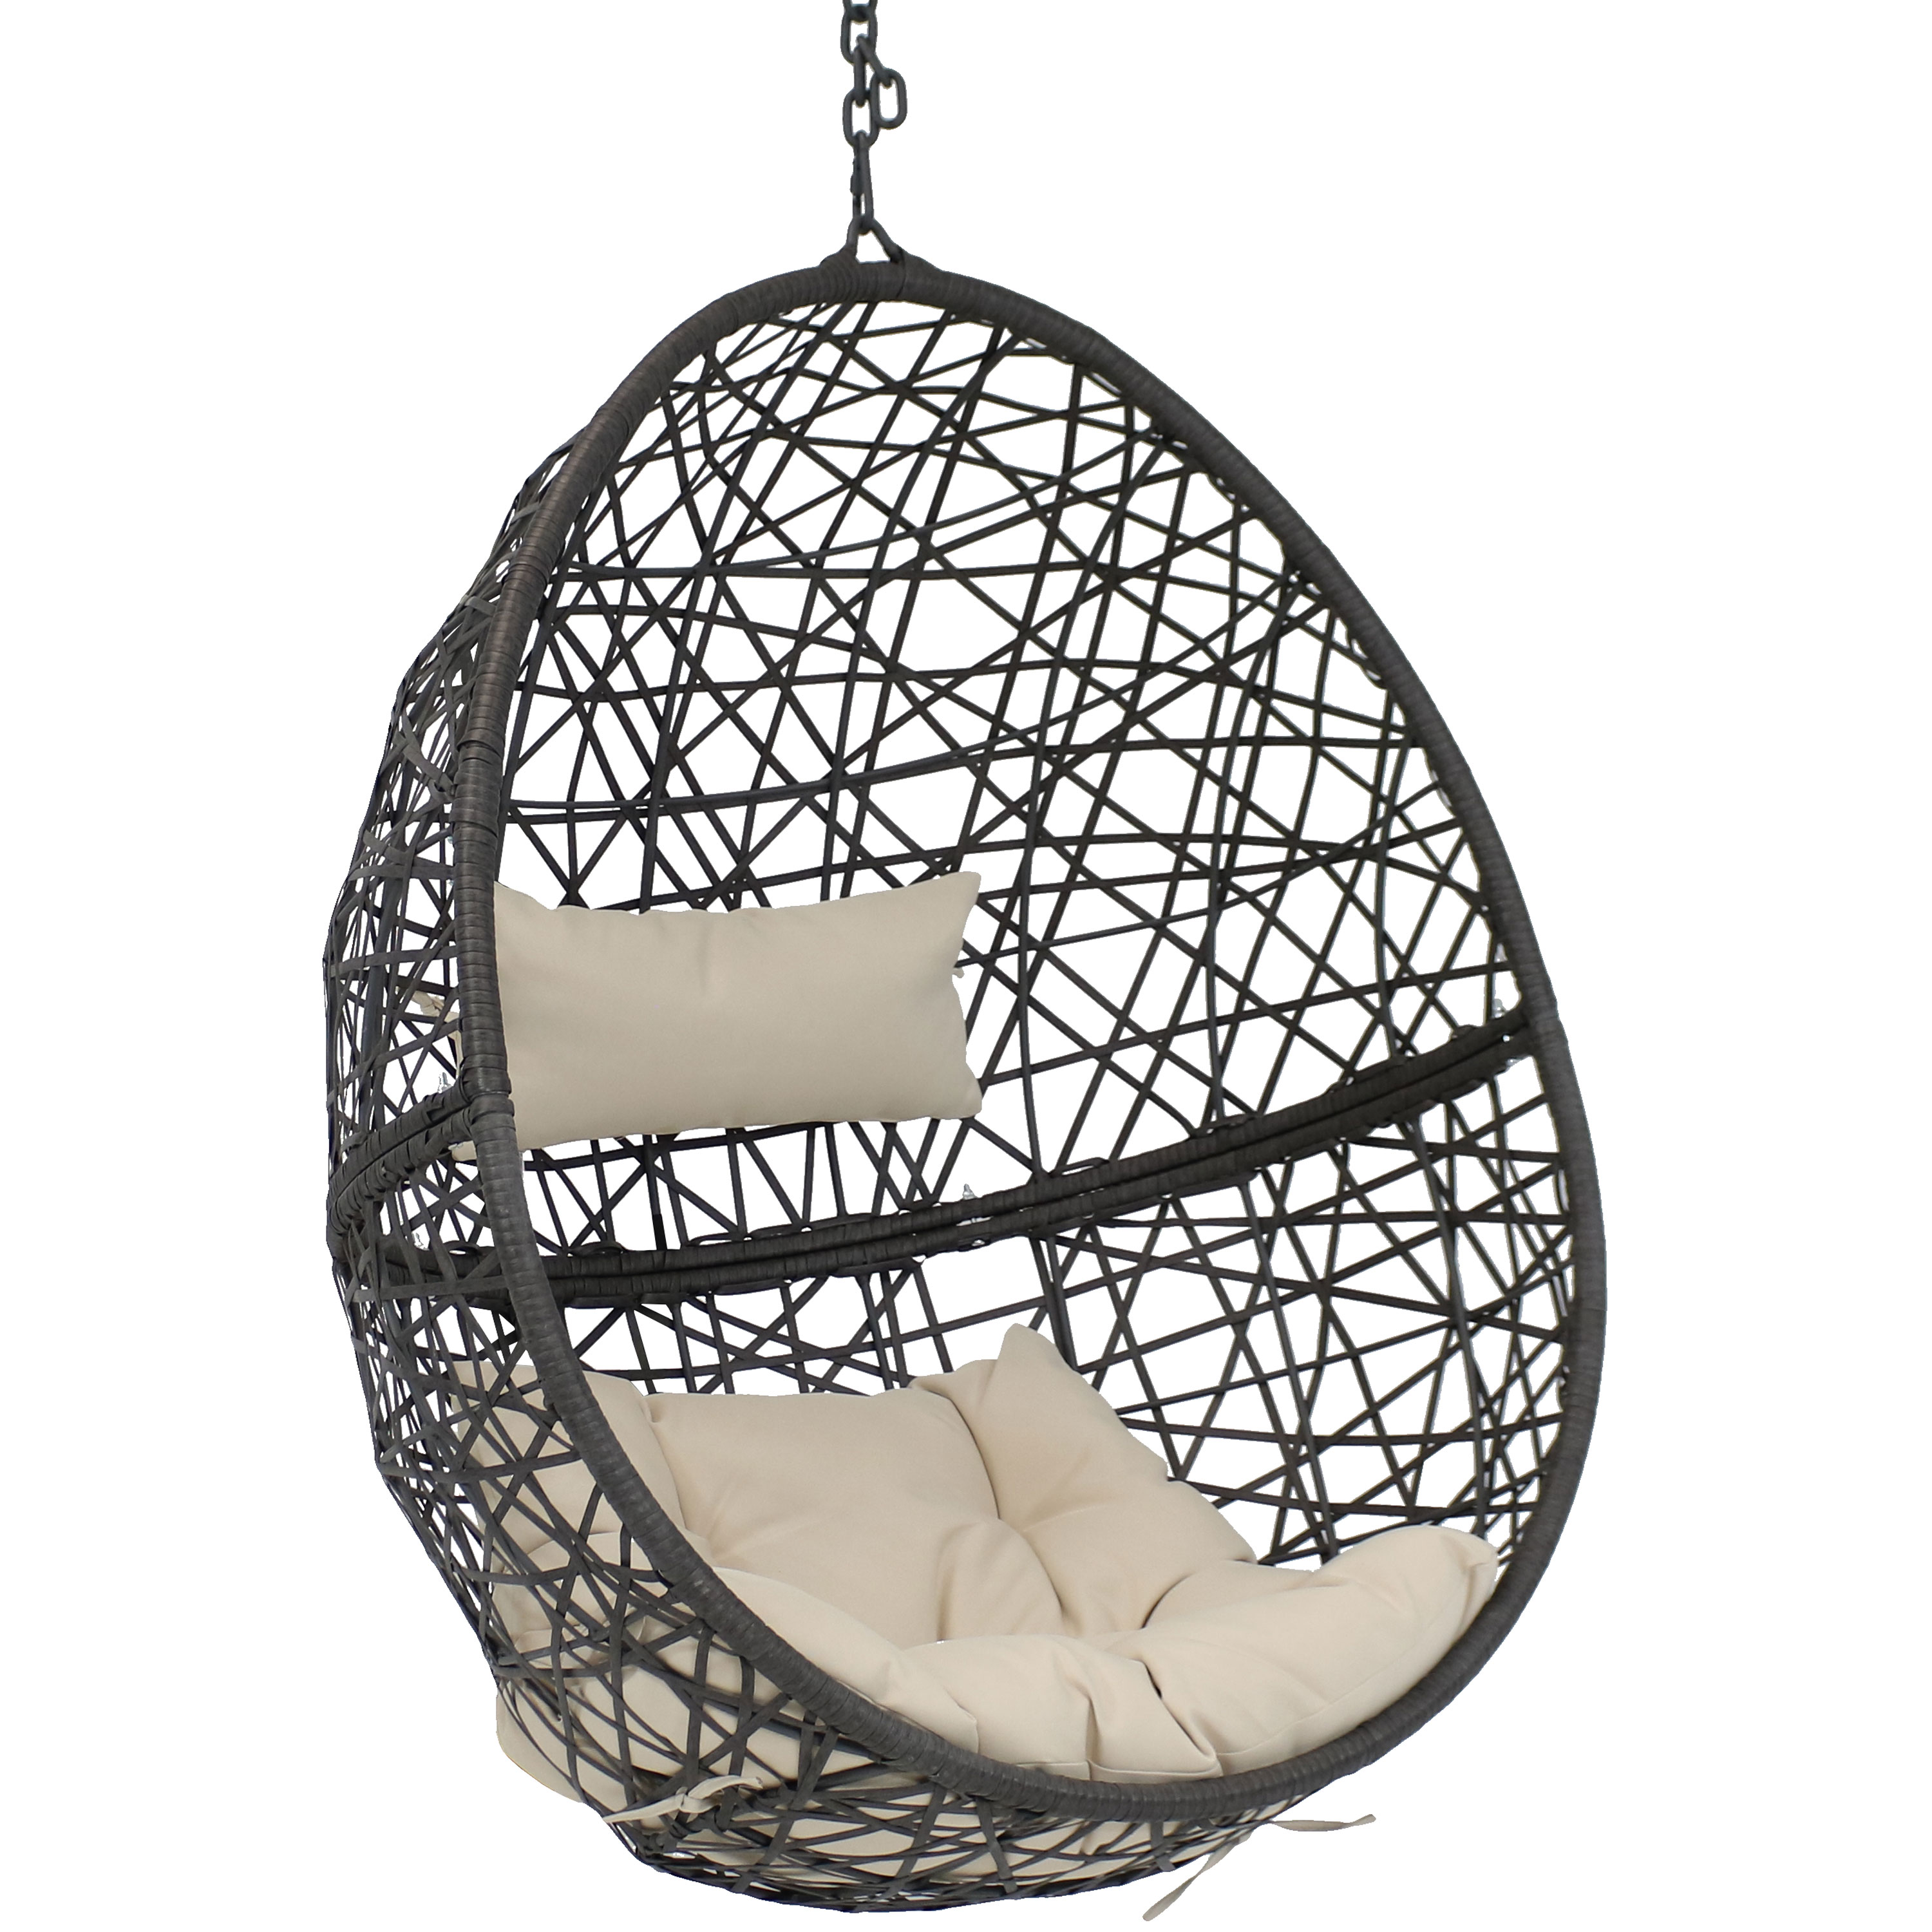 Sunnydaze Caroline Hanging Egg Chair, Resin Wicker, Modern Design, Outdoor Use, Includes Cushion, Beige